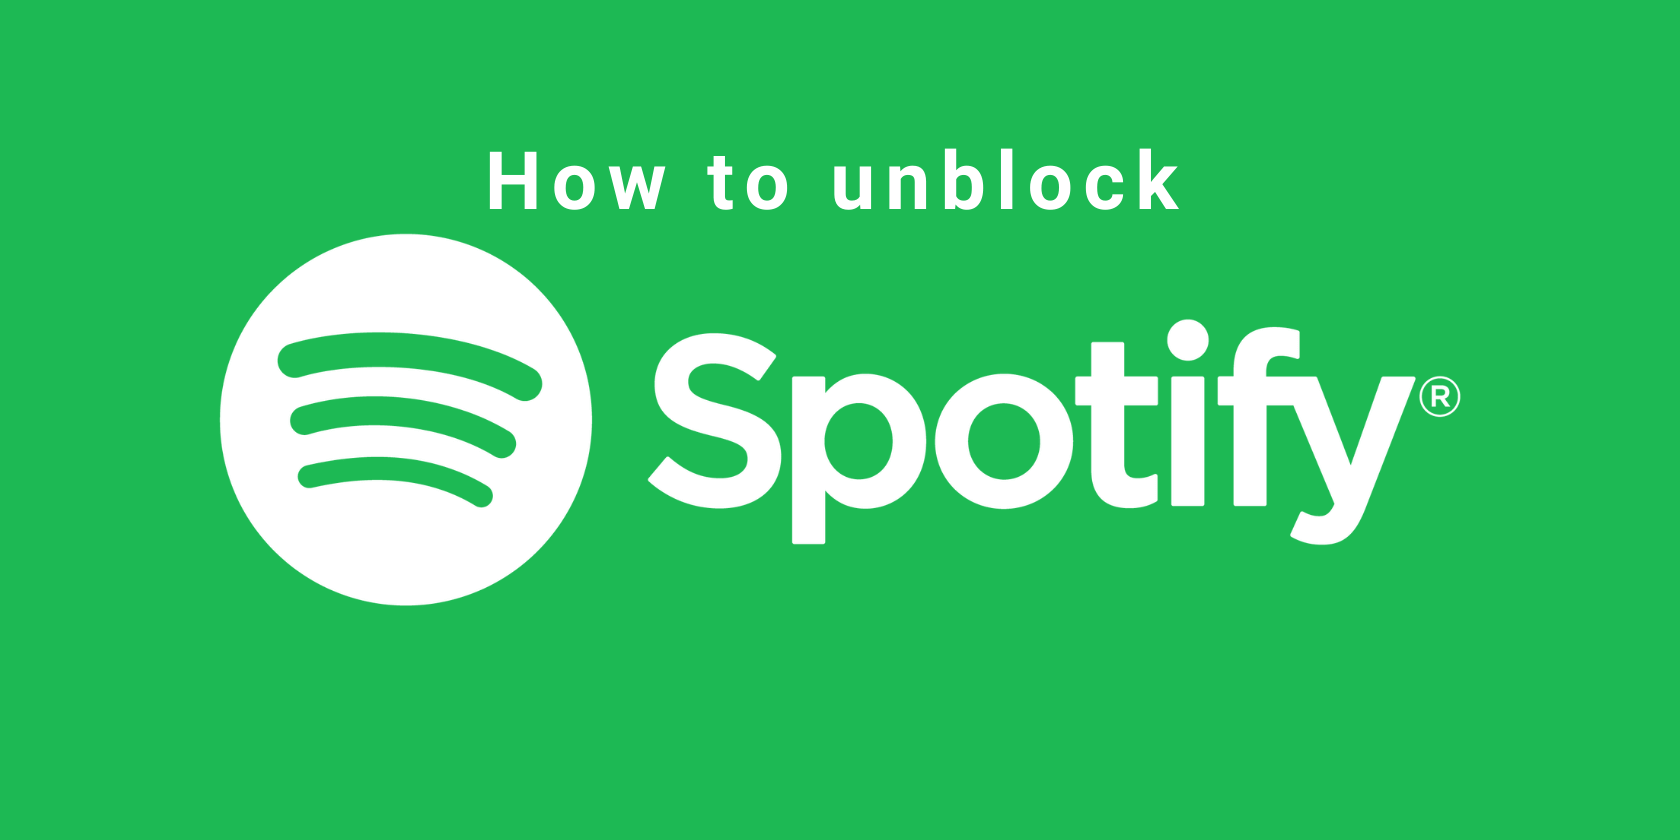 Unblock Spotify